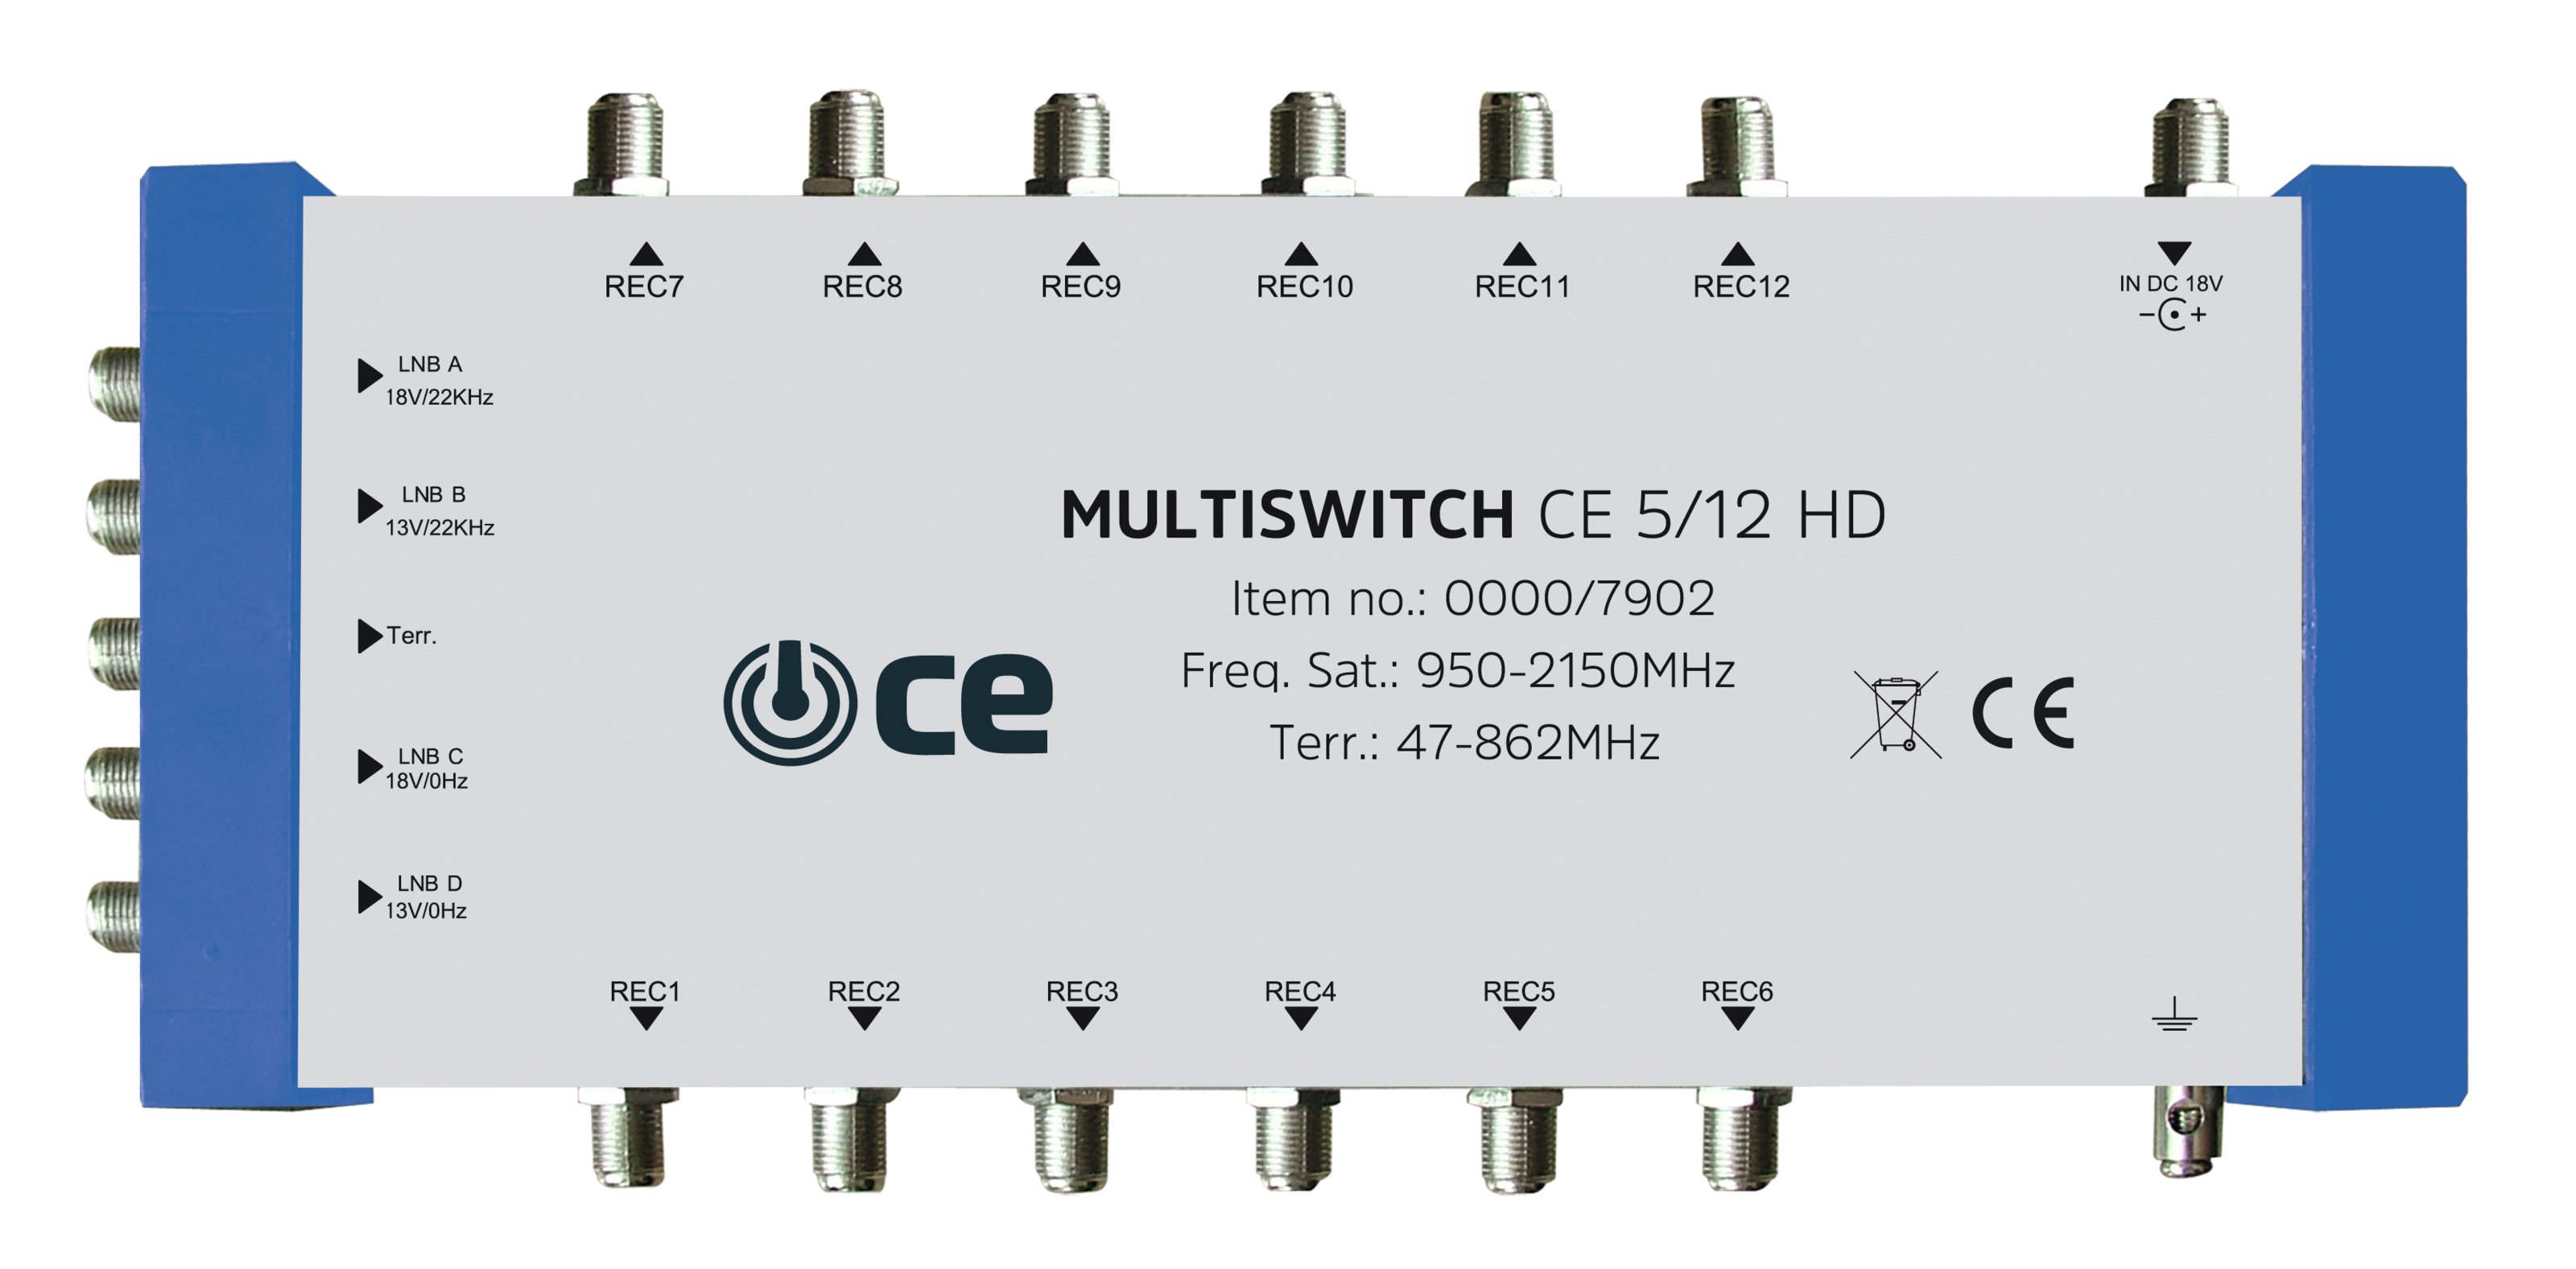 Multiswitch CE 5/12 HD